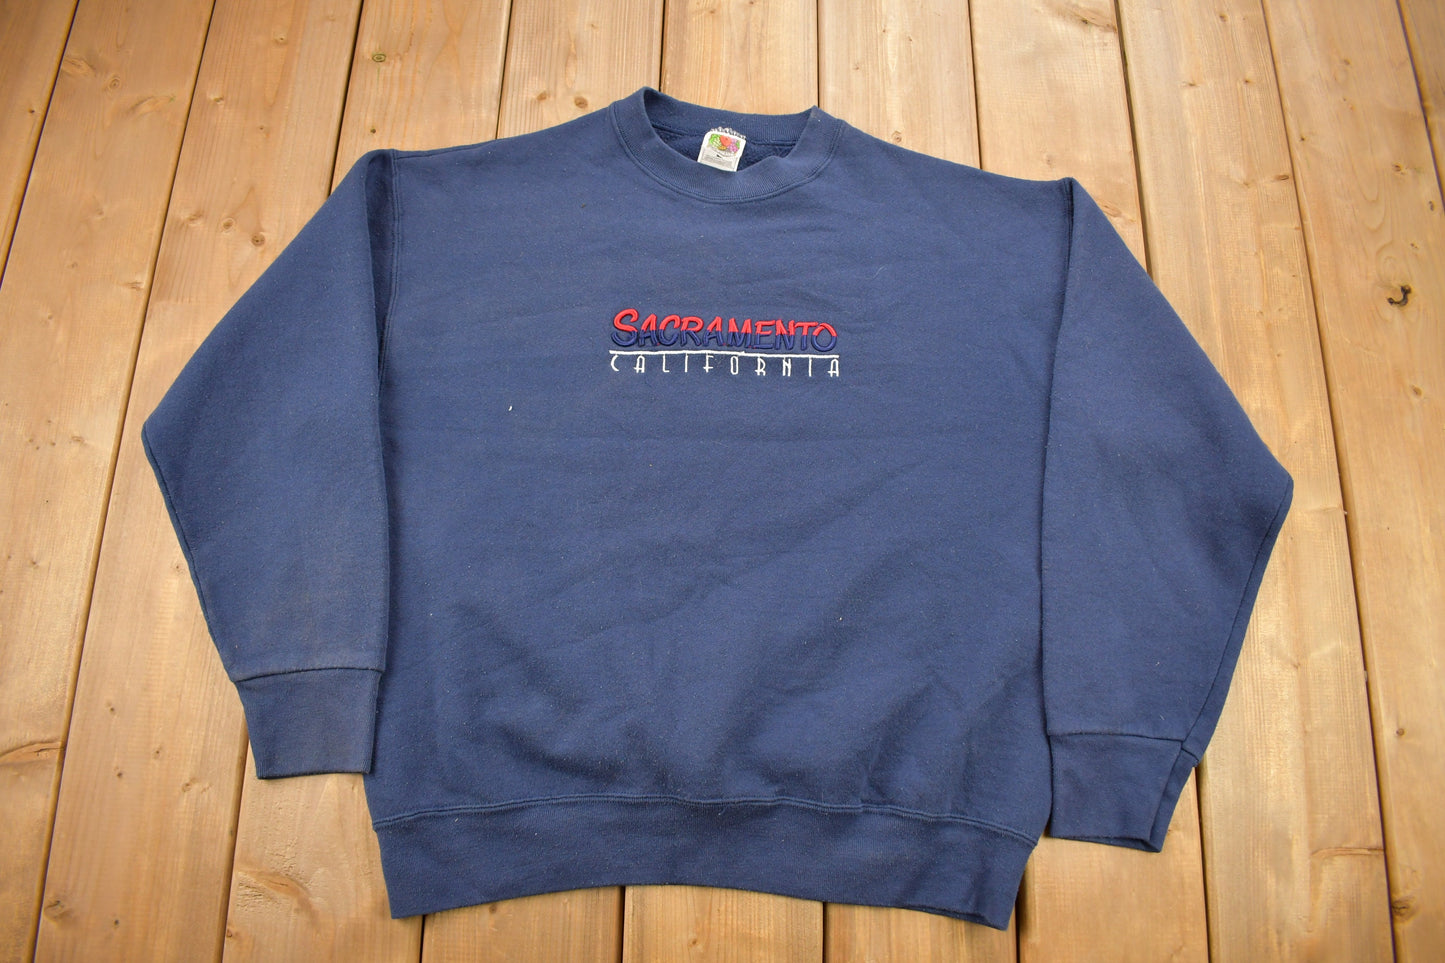 Vintage 1990s Sacramento California Embroidered Crewneck Sweatshirt / 90s Crewneck / Souvenir Sweater / Travel And Vacation